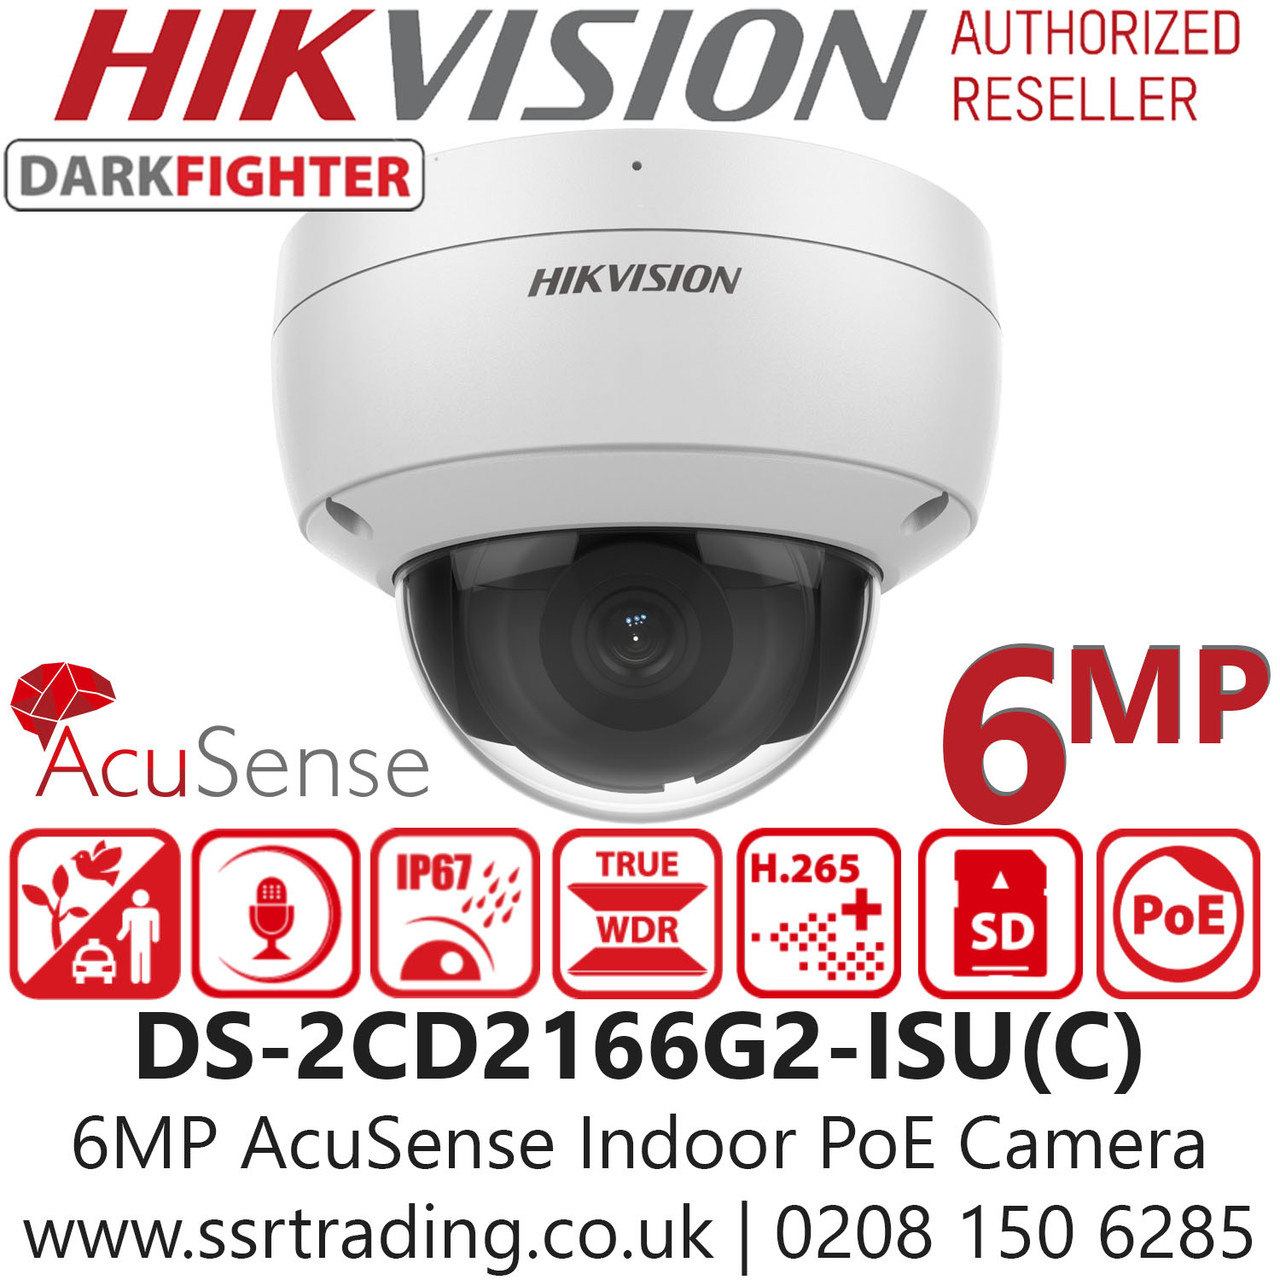 Hikvision 6MP AcuSense Darkfighter Indoor PoE IP Dome Camera - Built in ...